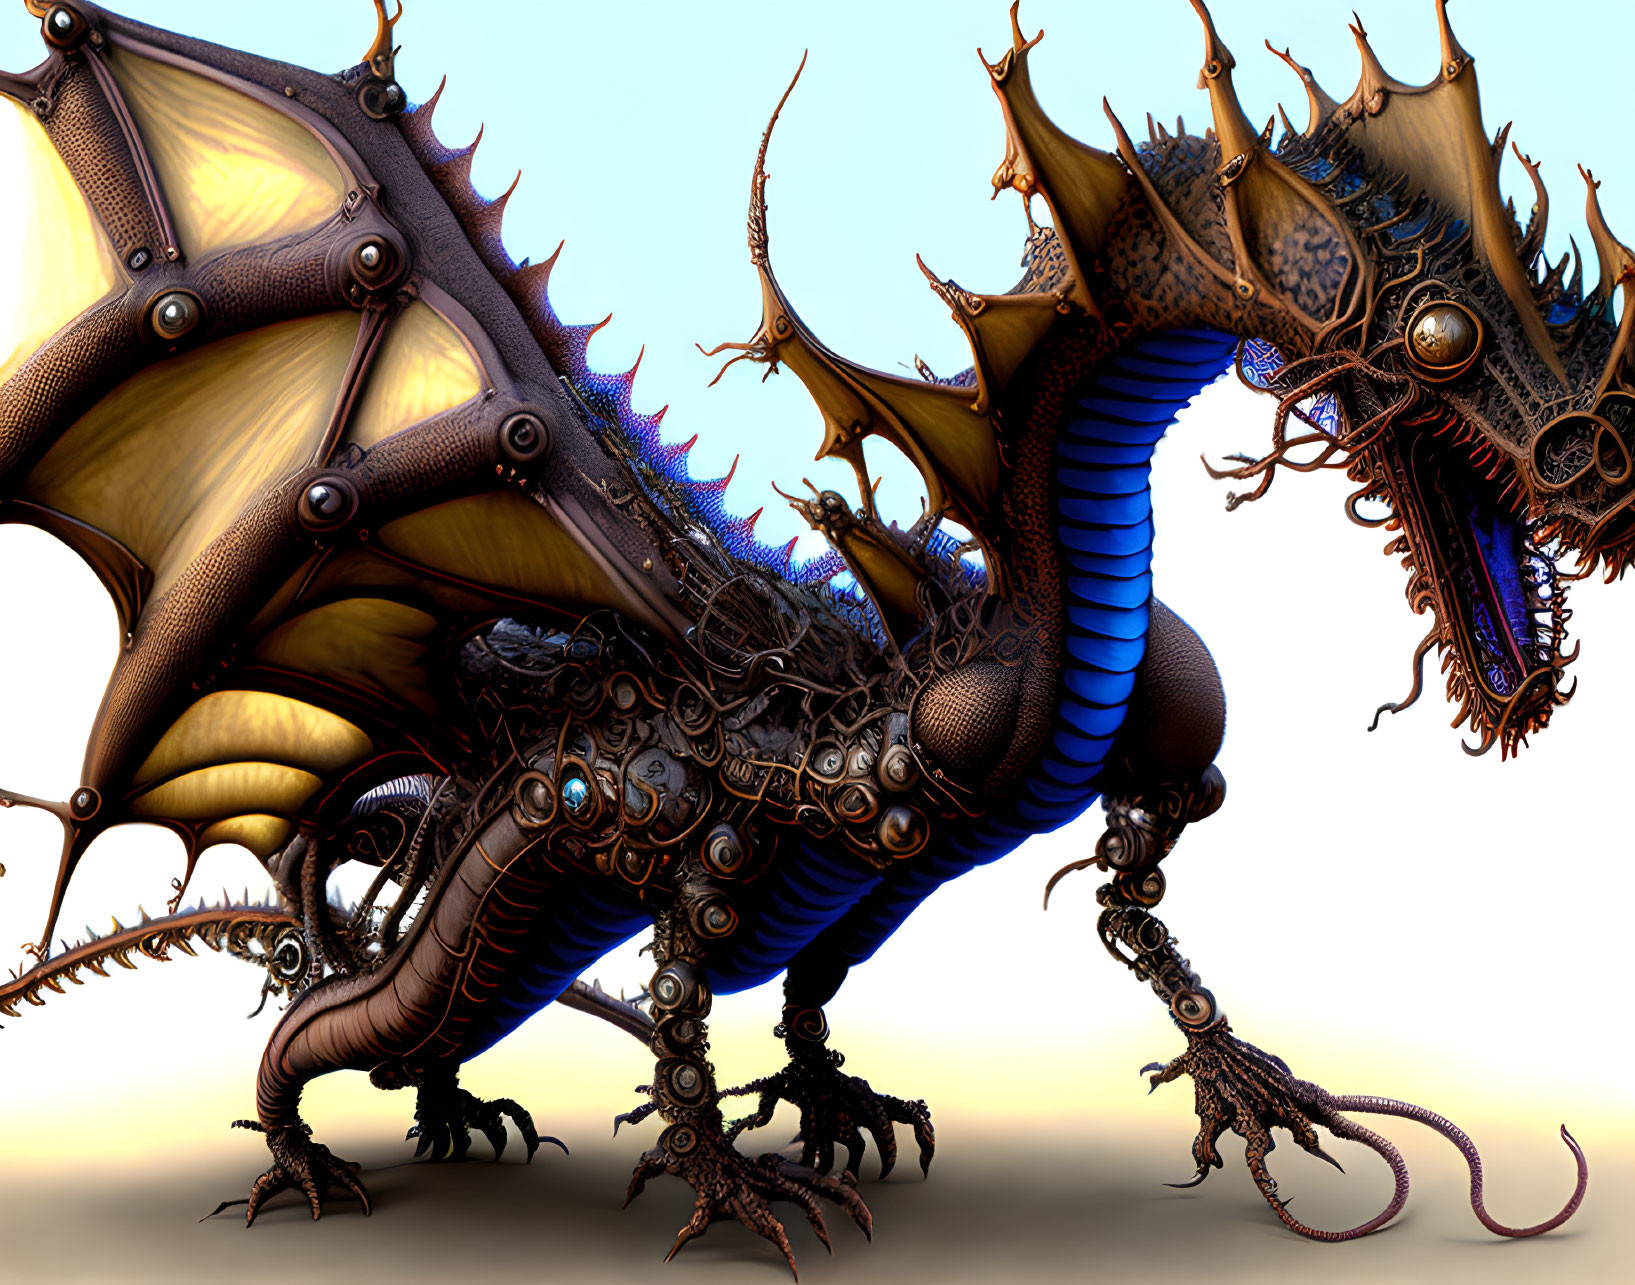 Mechanical dragon digital art with intricate gears and metallic design